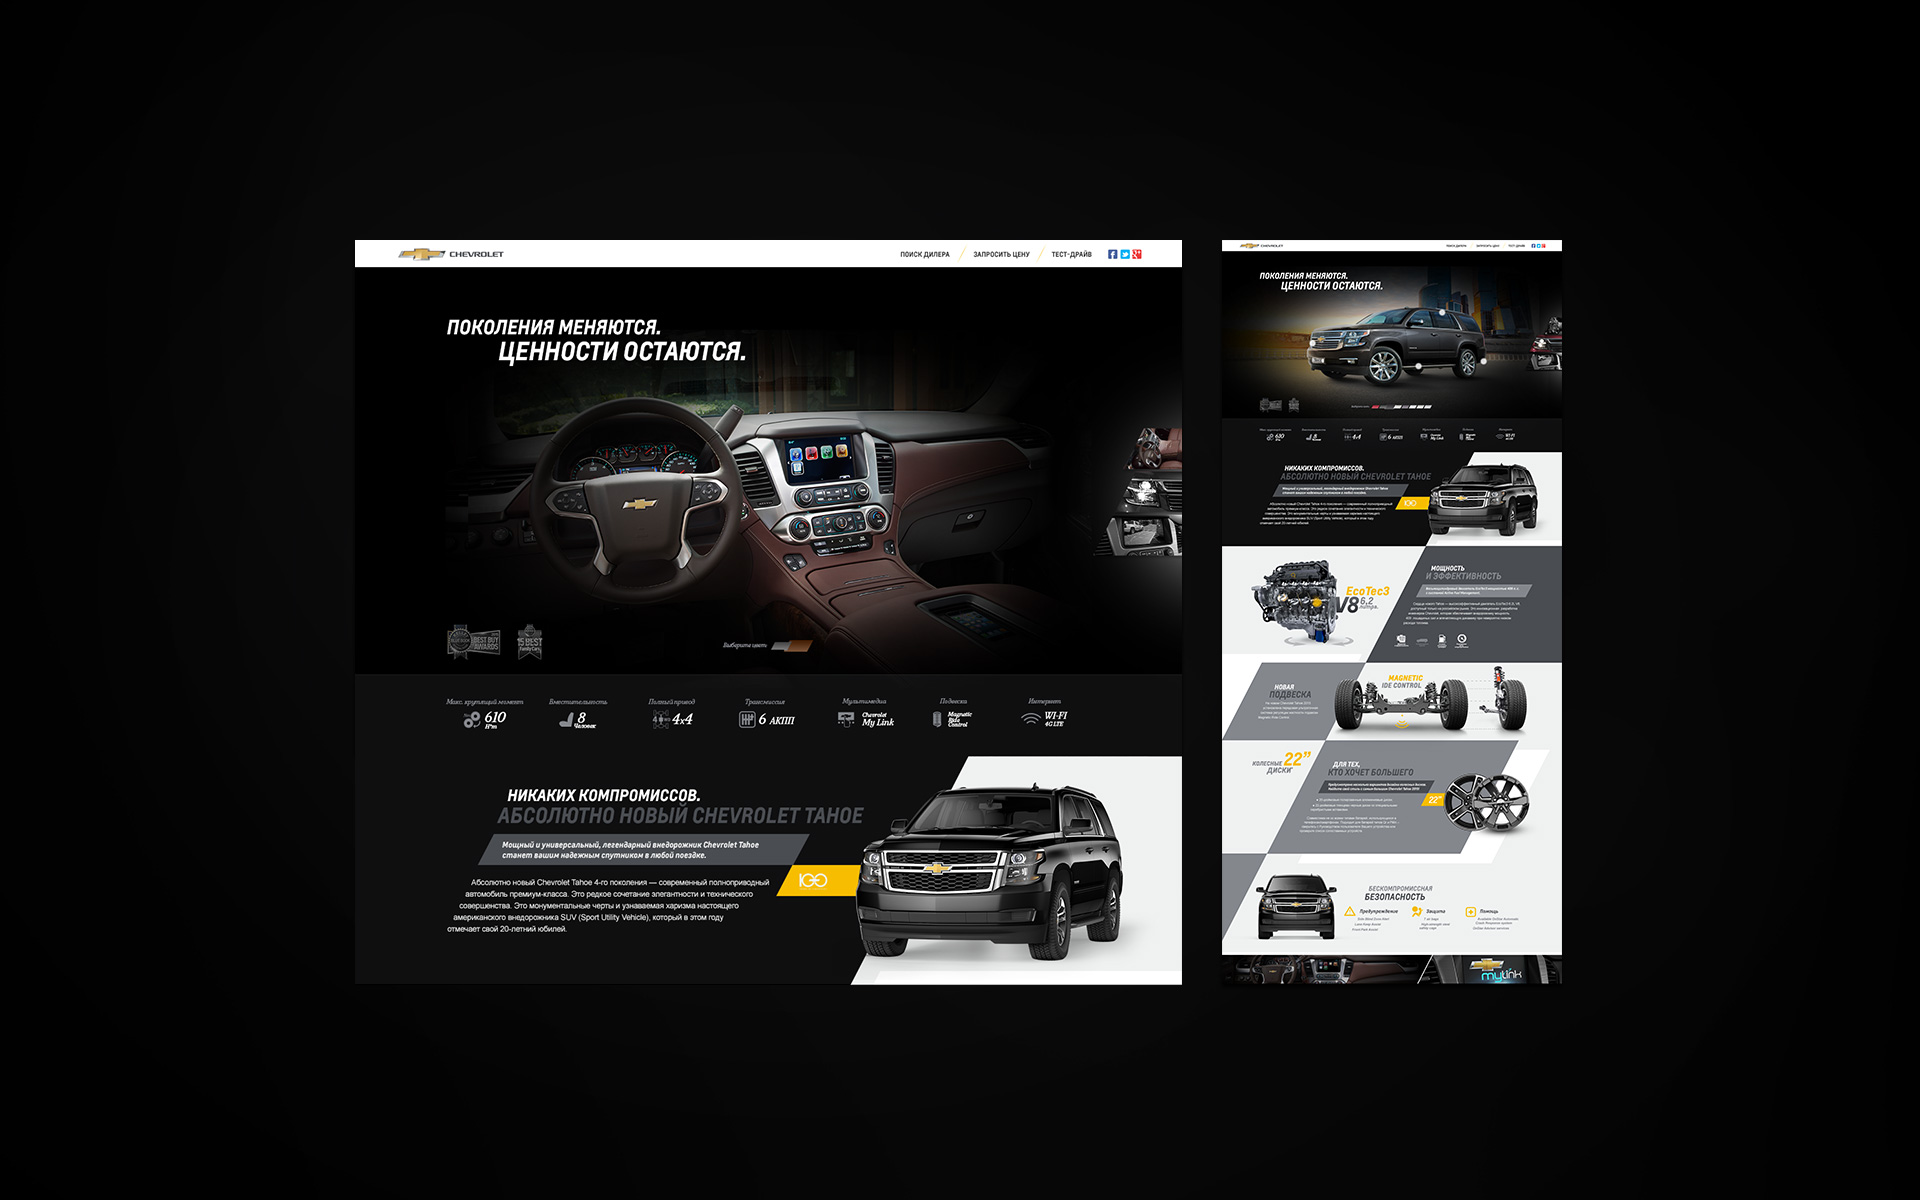 Chevrolet Tahoe 2015 promo site.